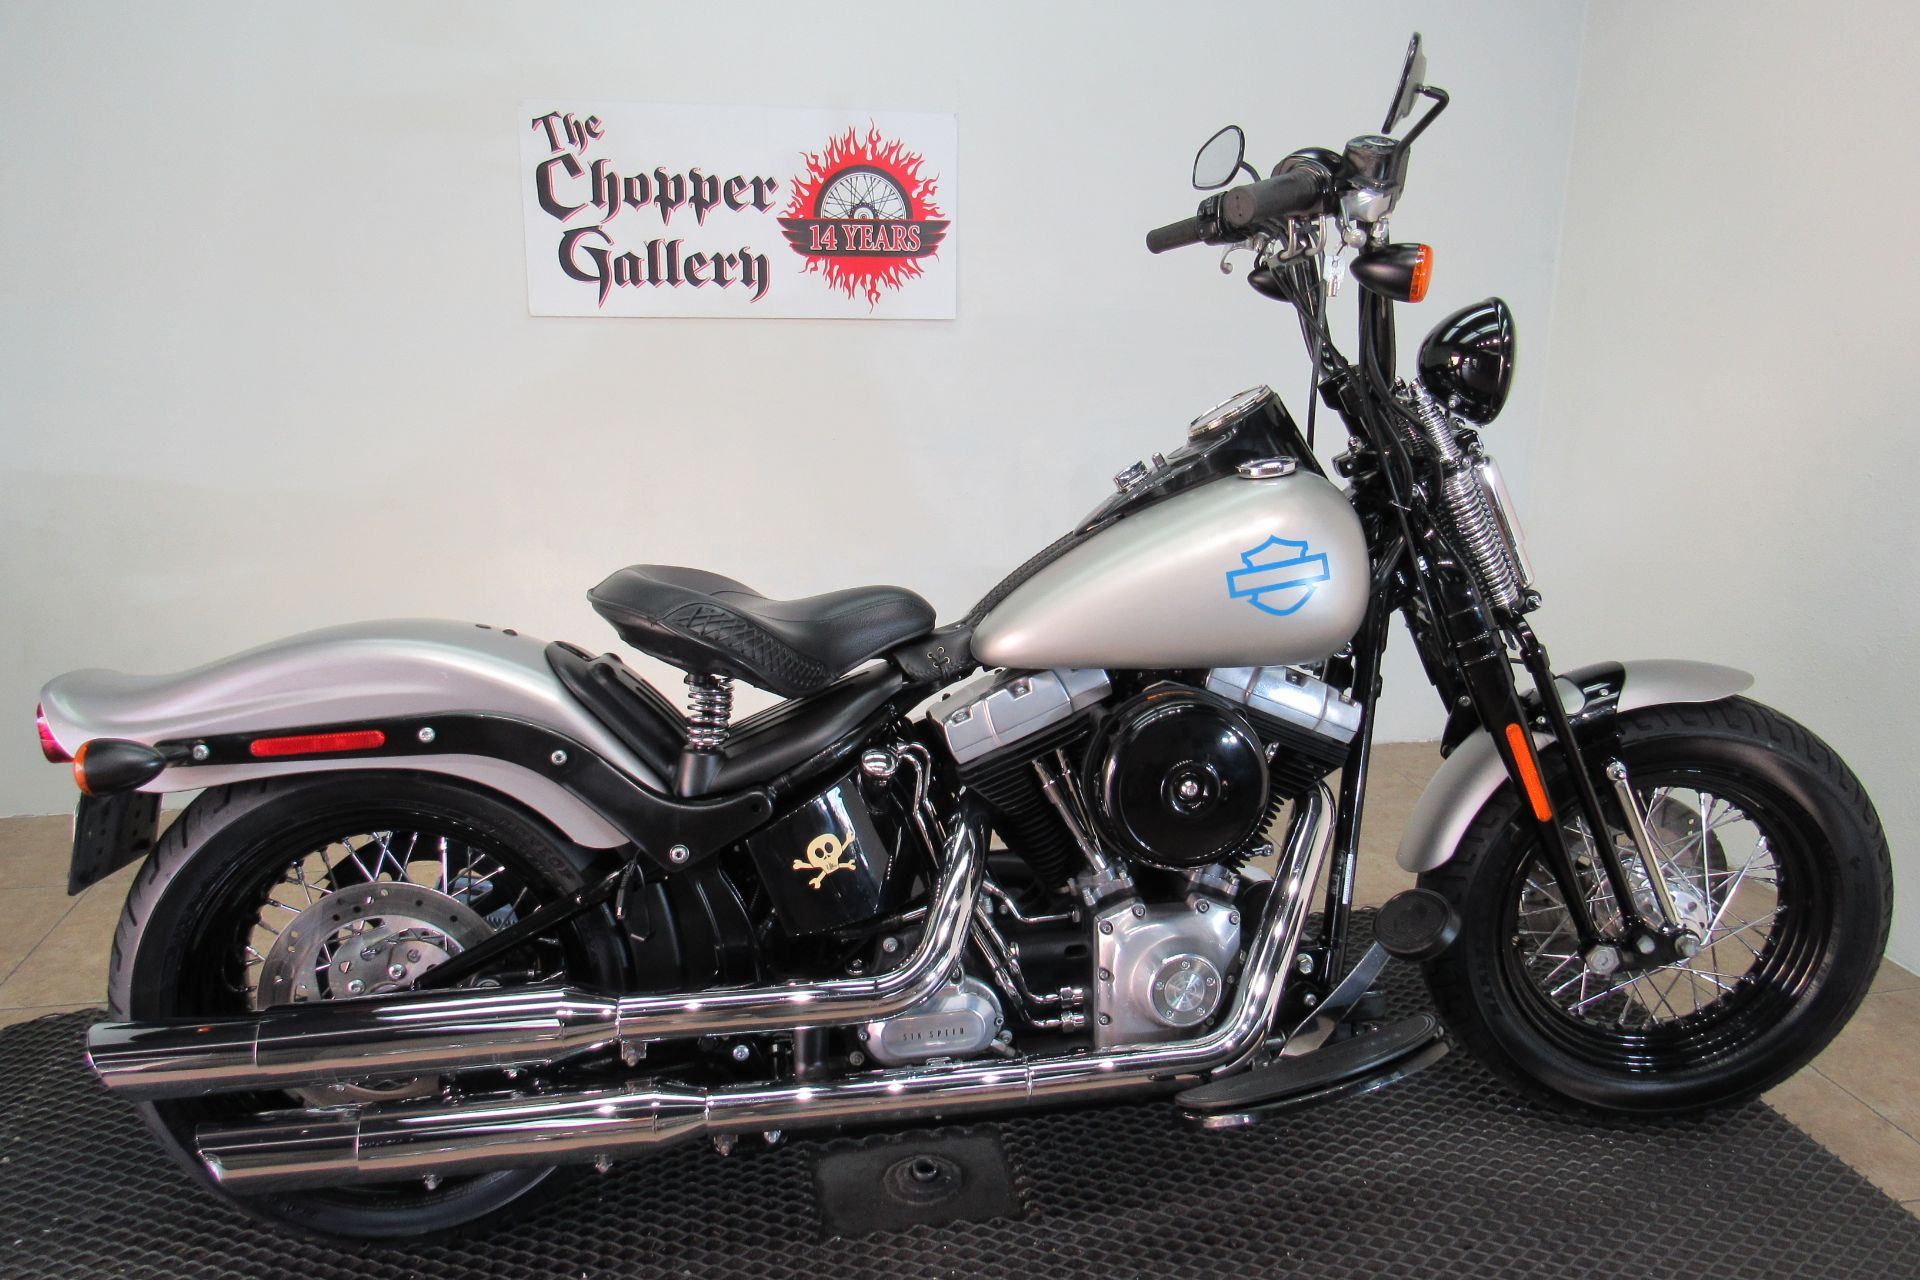 2009 Harley-Davidson Softail® Cross Bones™ in Temecula, California - Photo 5